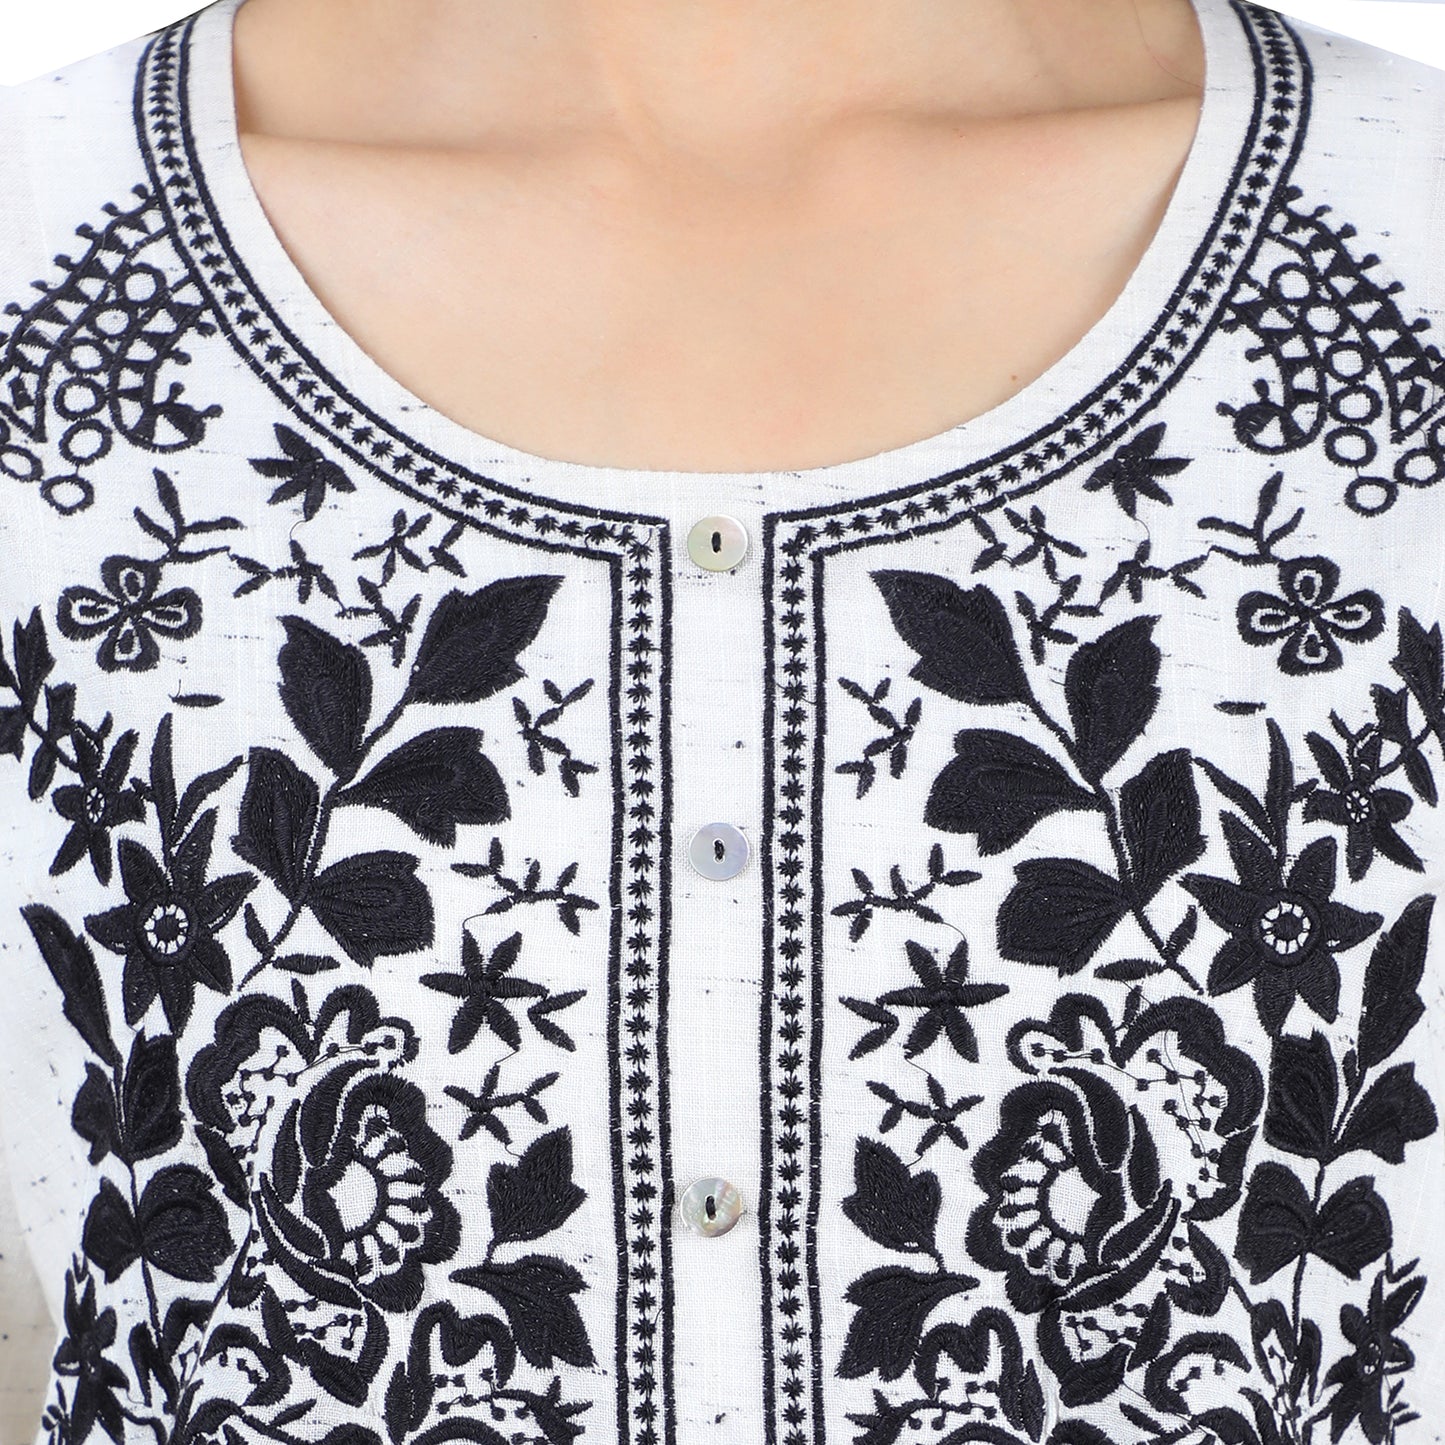 Handloom Fabric Classic Black and White Embroidered Kurti UCK22021